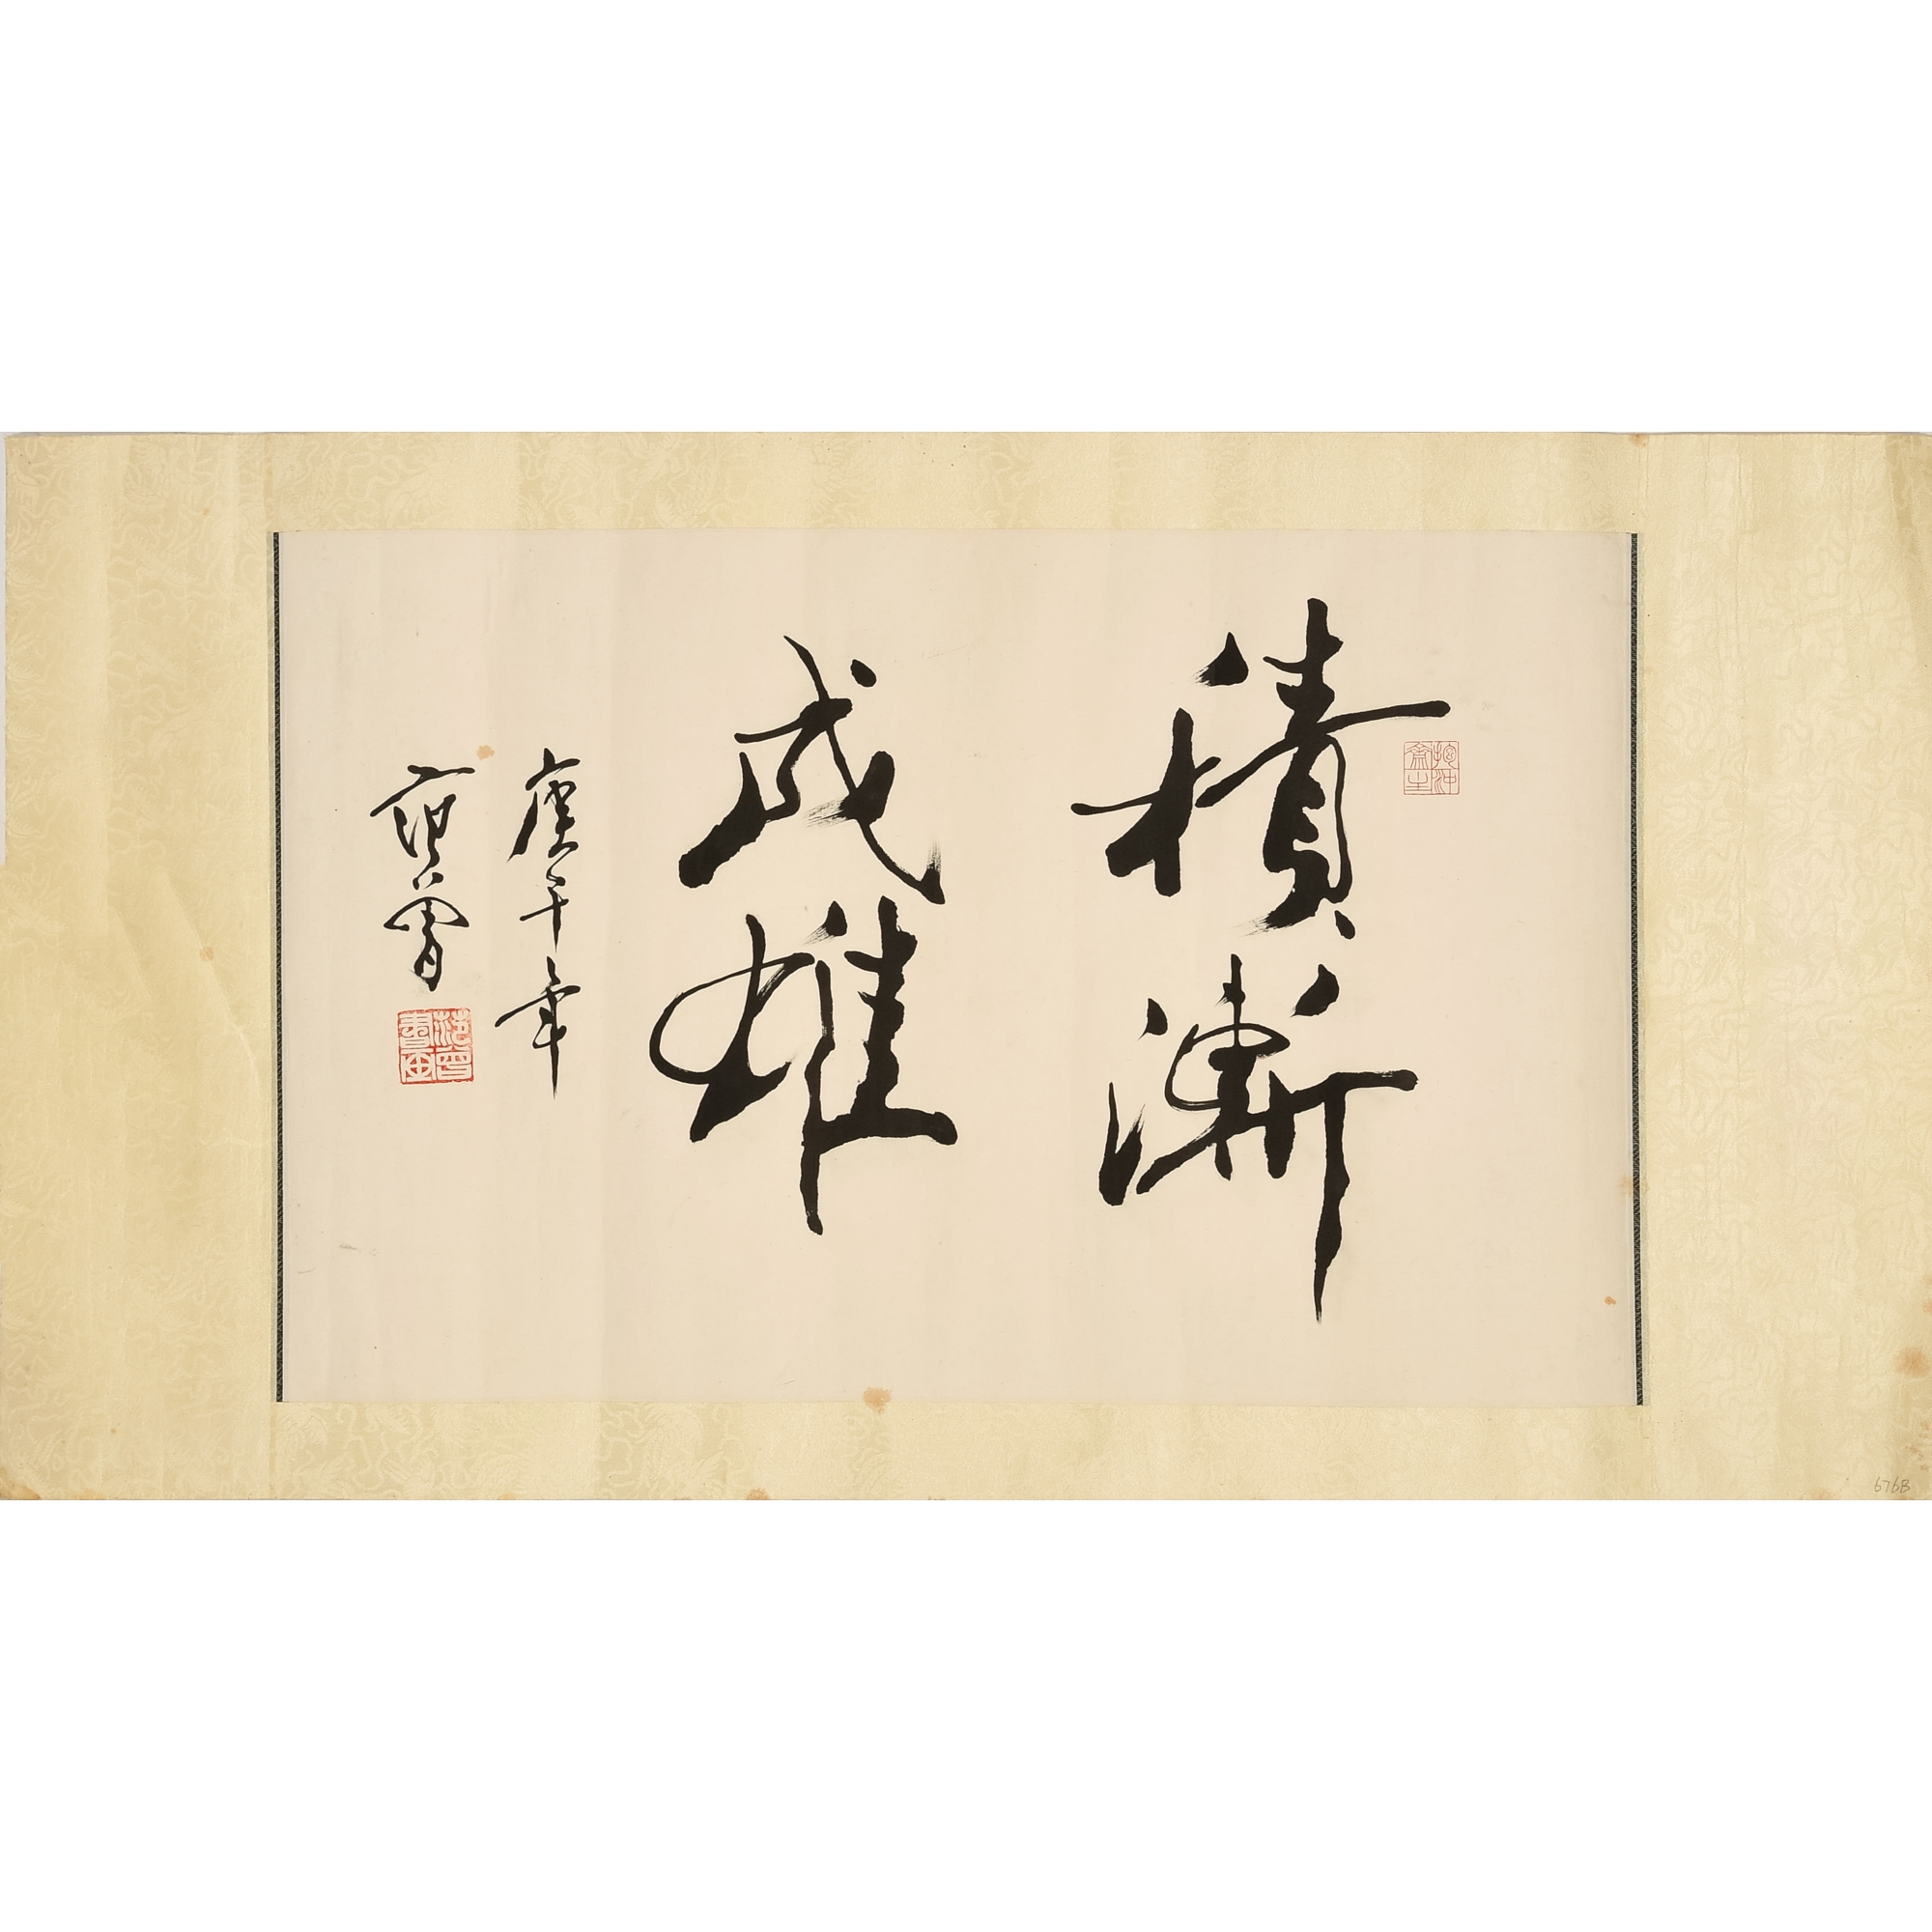 A Chinese calligraphy, by Fan Zeng (Chinese, b. 1938 by Fan Zeng, 1938